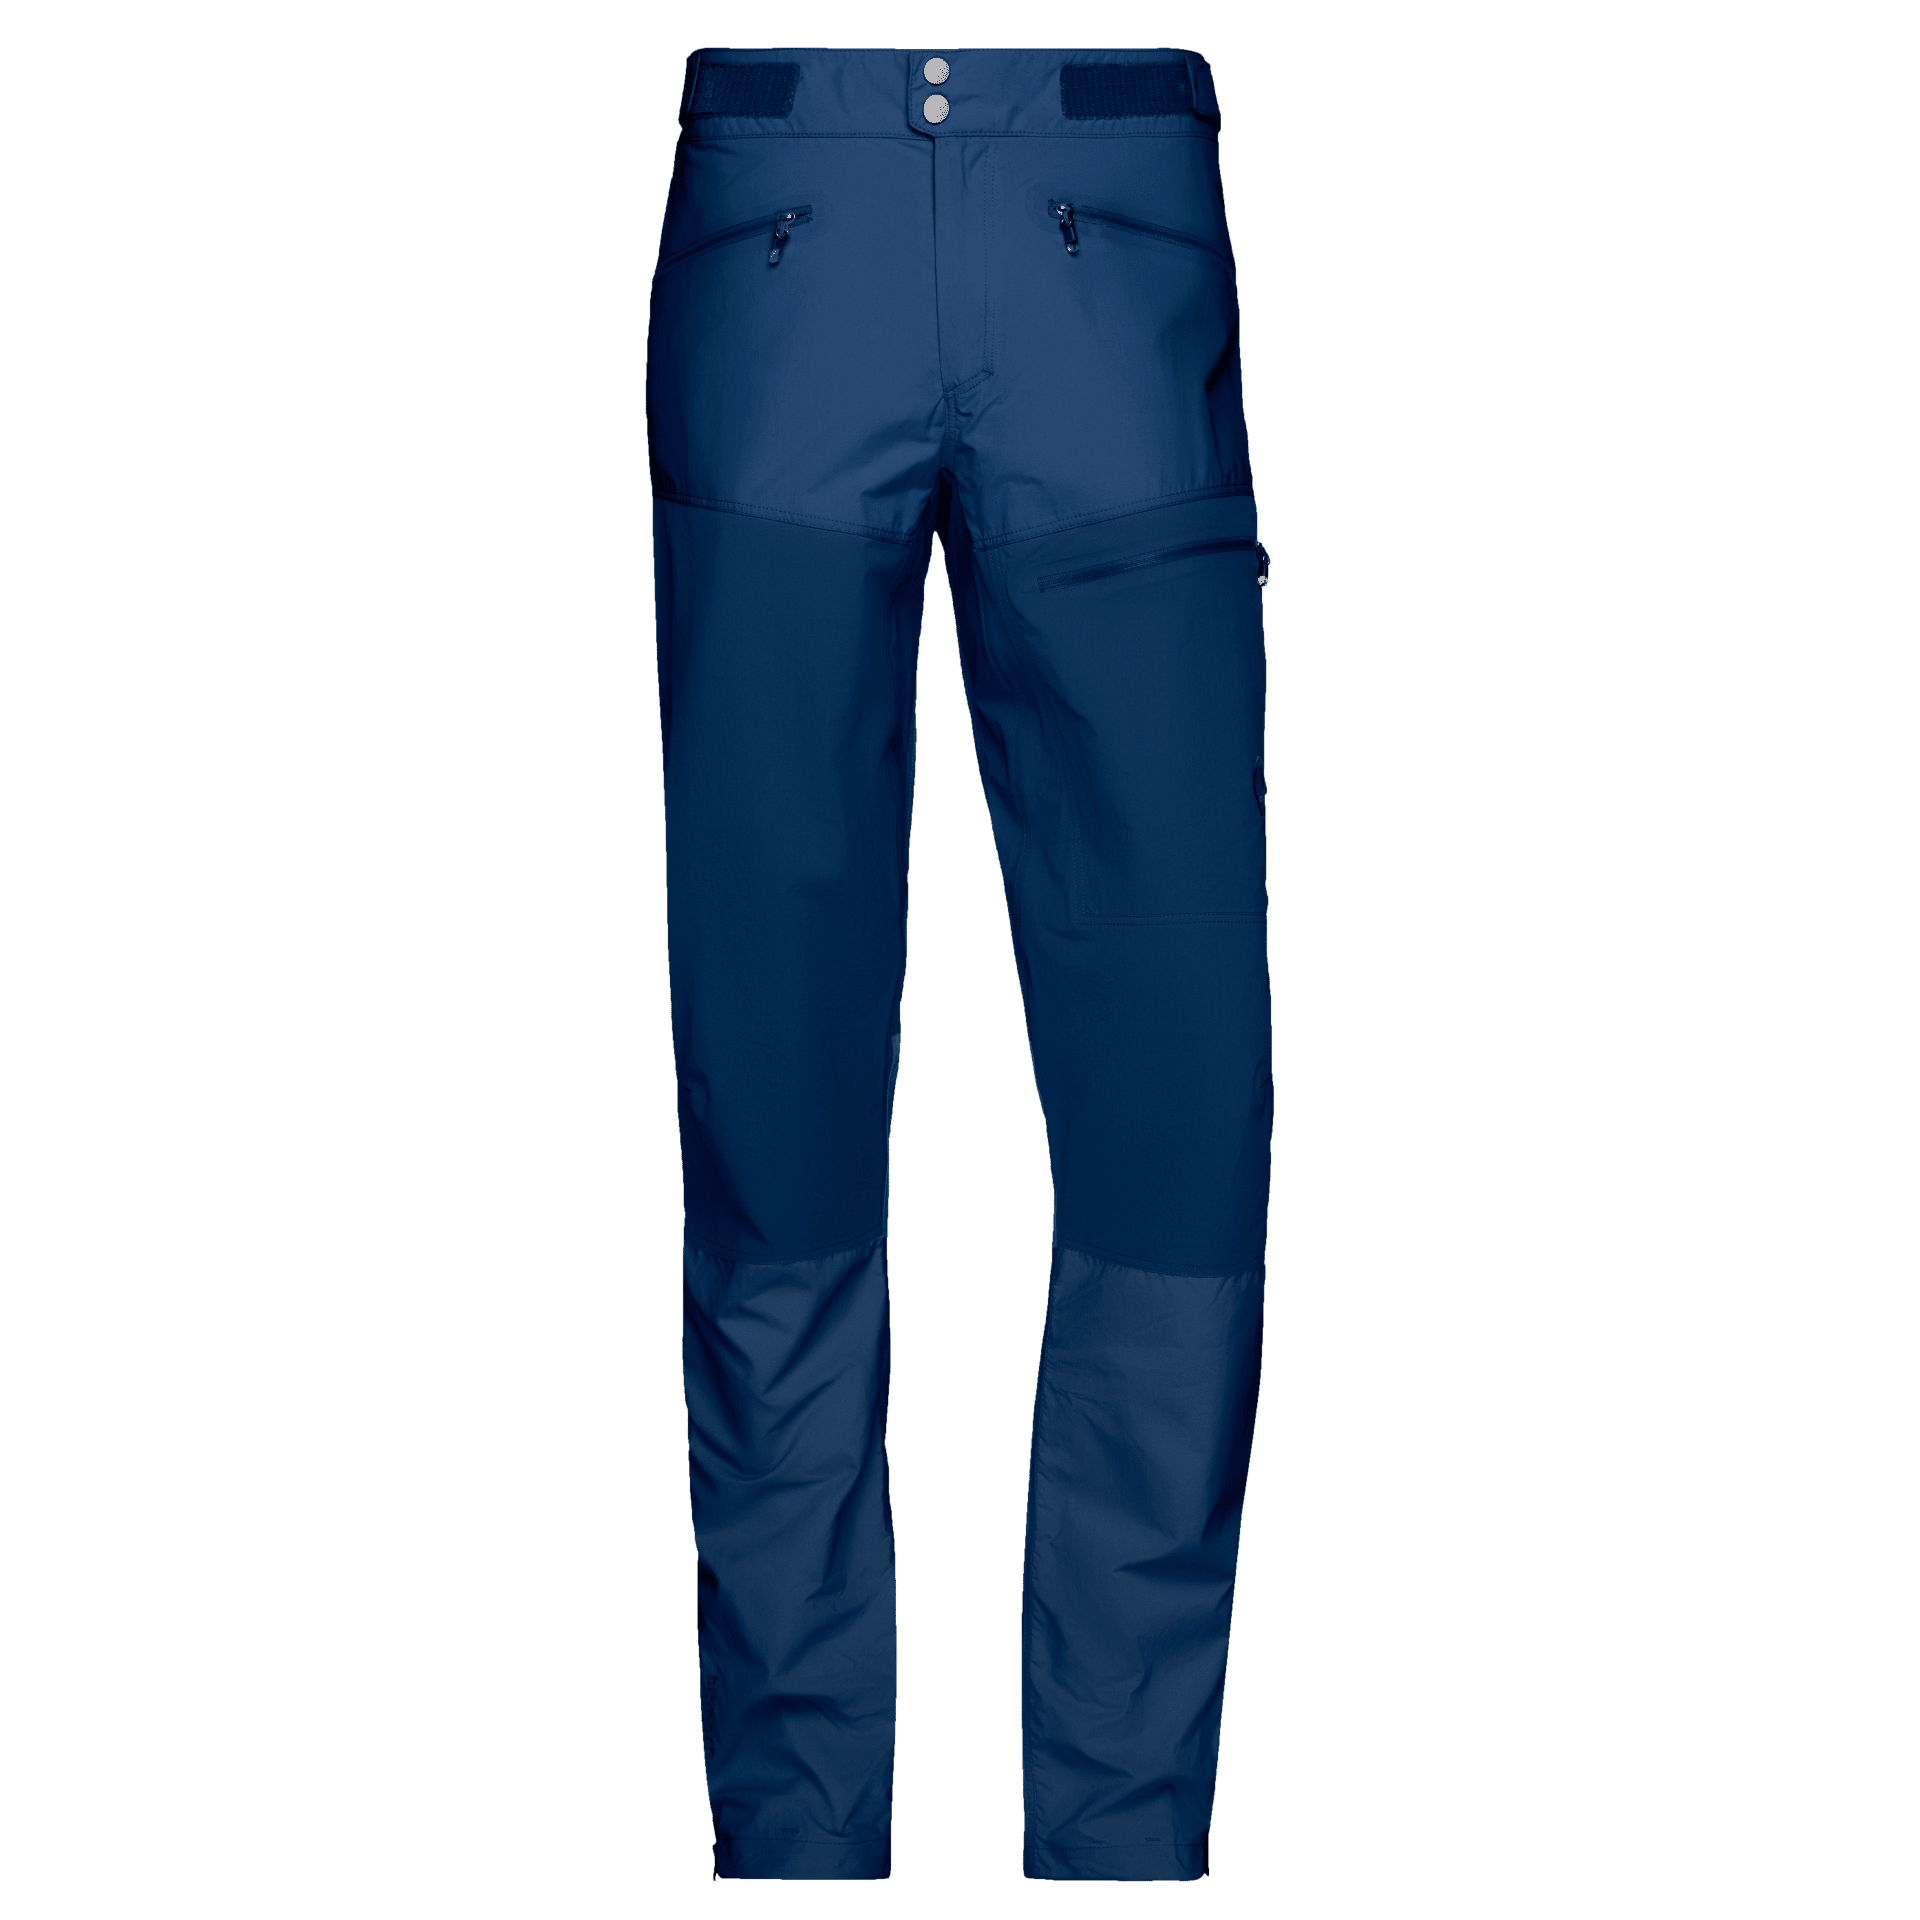 Nørrona Bitihorn Lightweight Pants - Walking pants - Men's